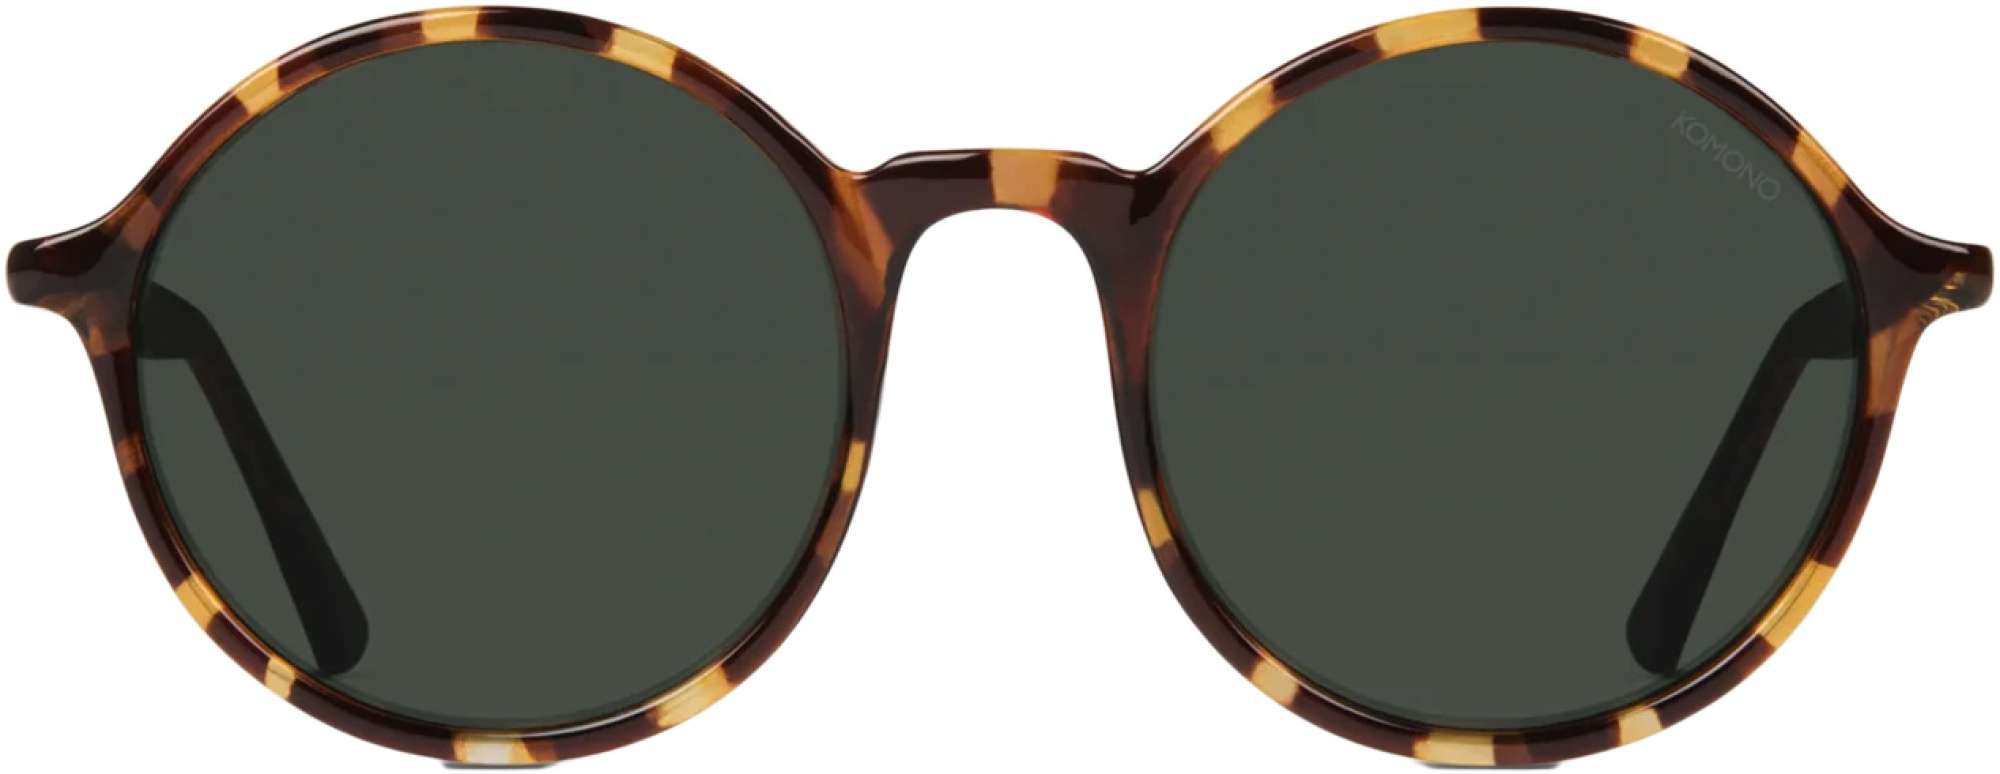 Afbeelding van Komono Madison tortoise sunglasses